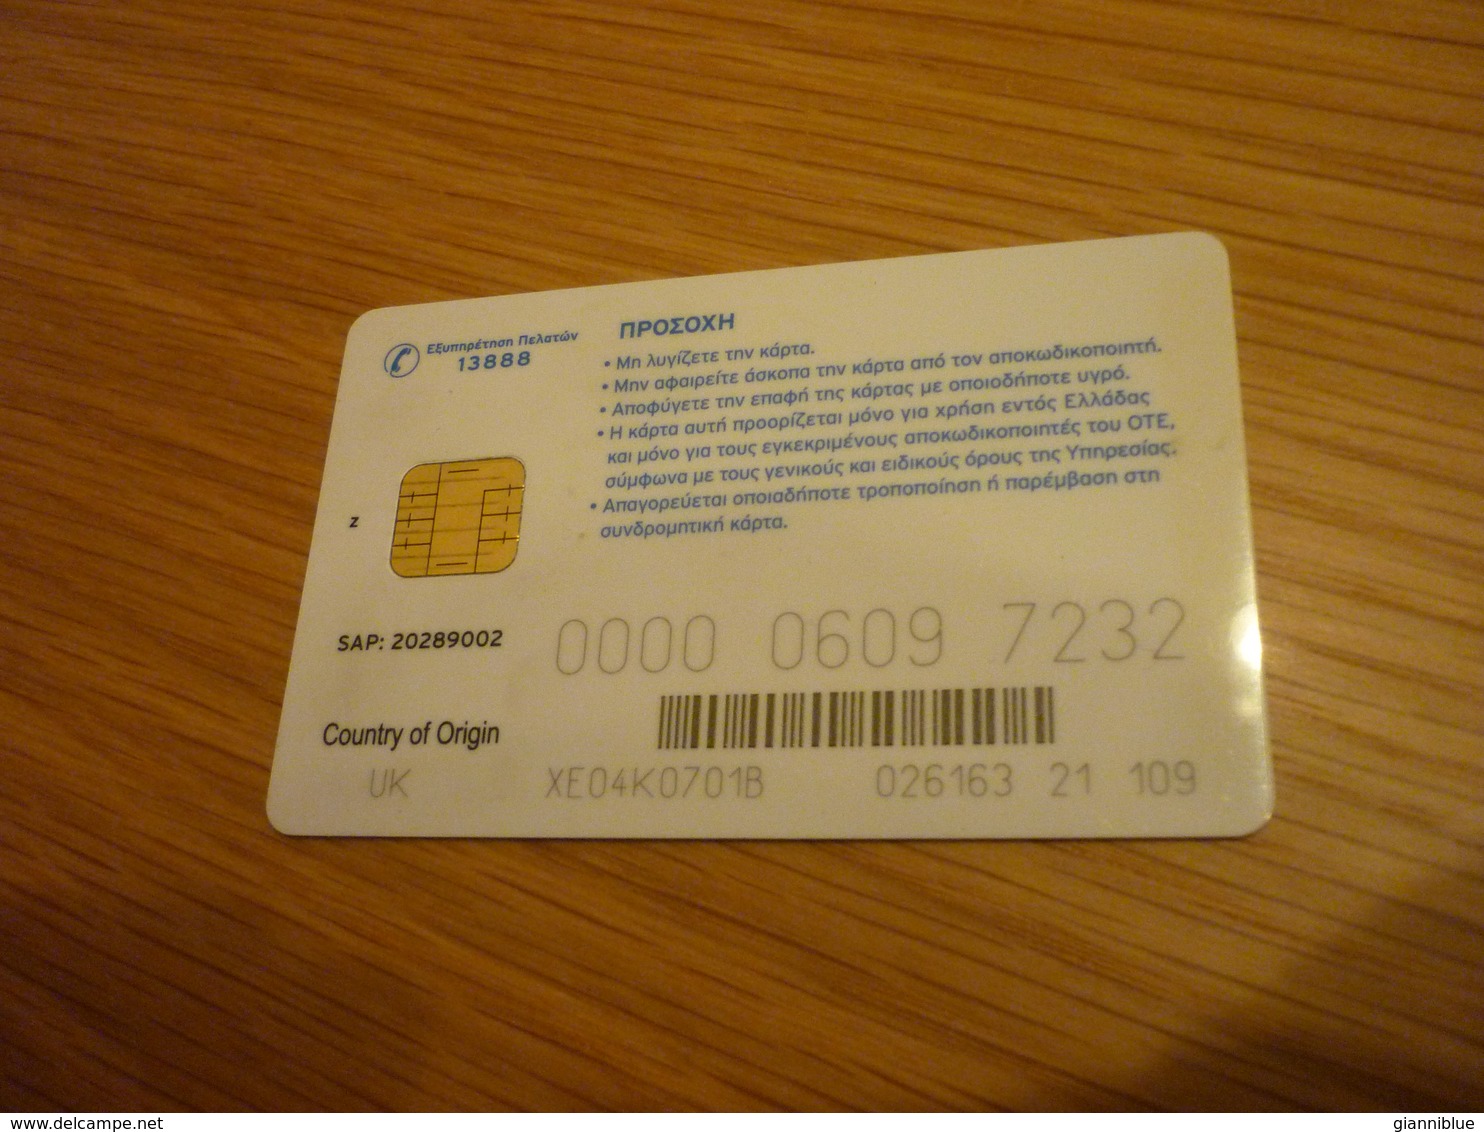 Greece OTE TV Television Digital Satellite Chip Card (version Z UK) - Telekom-Betreiber